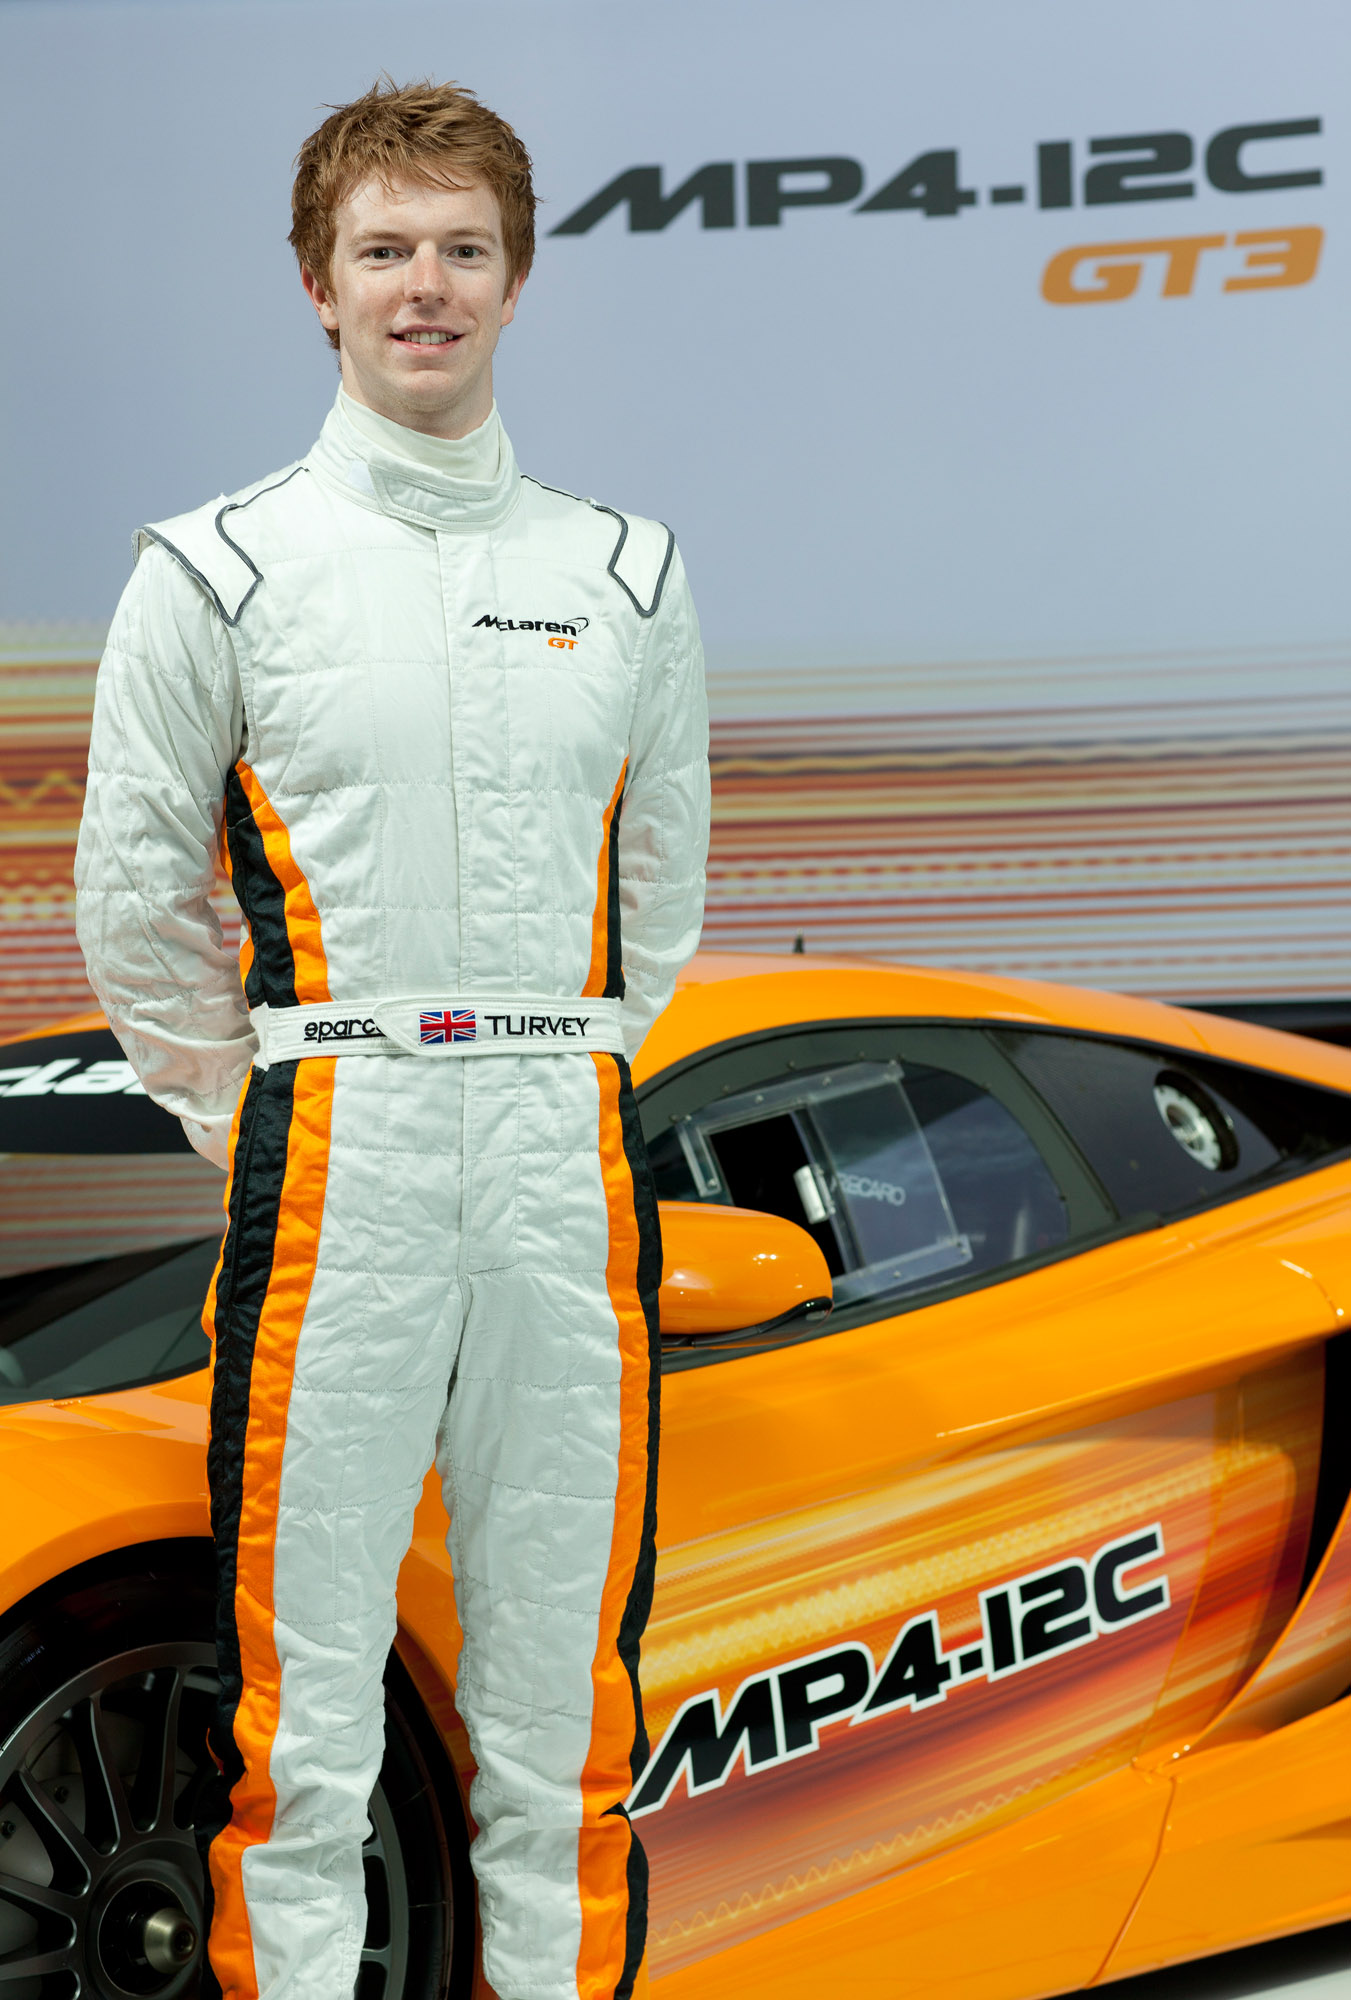 McLaren MP4-12C GT3 Conference